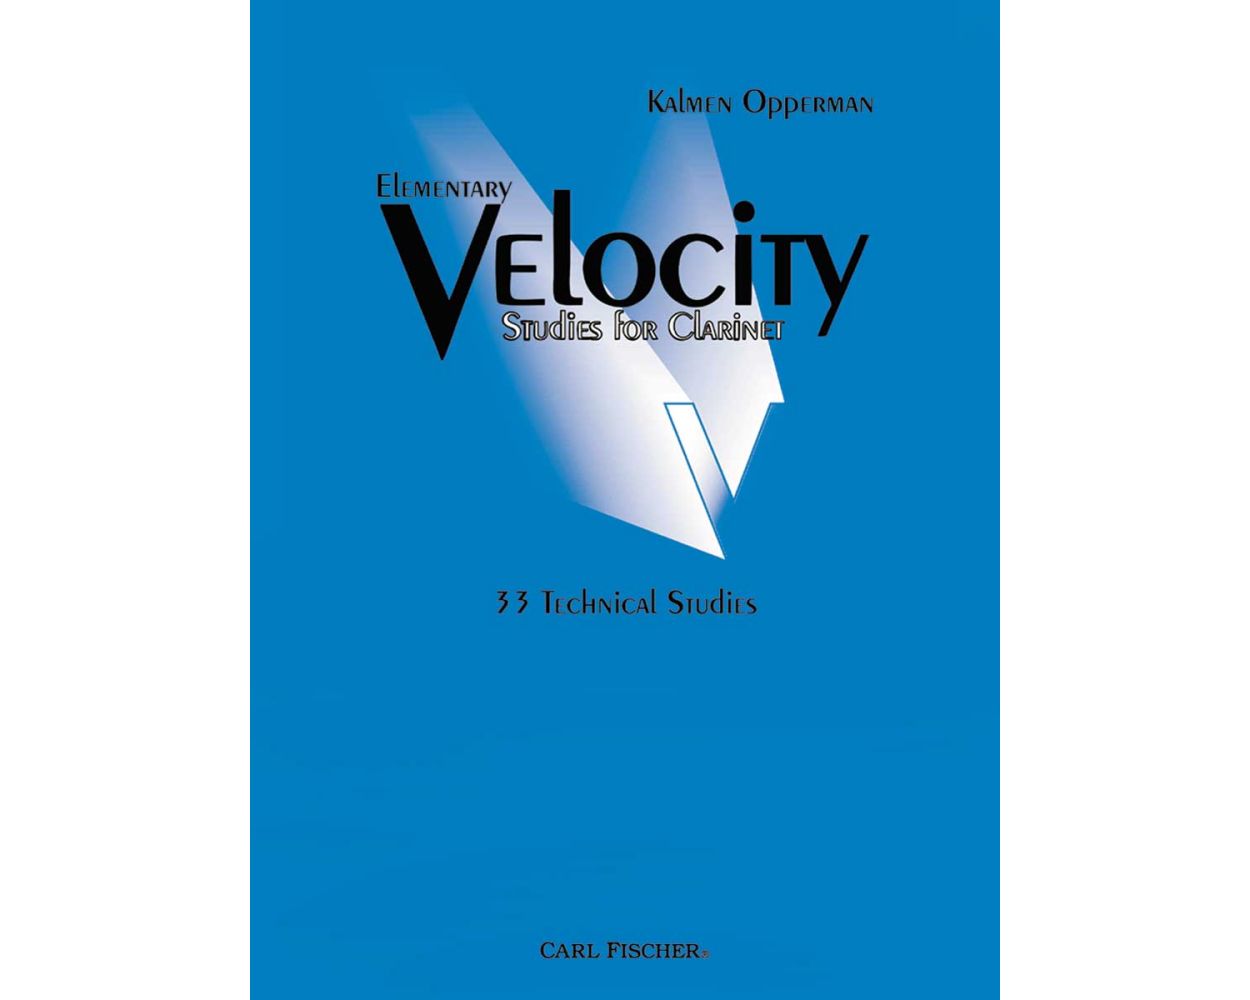 Opperman - Elementary Velocity Studies